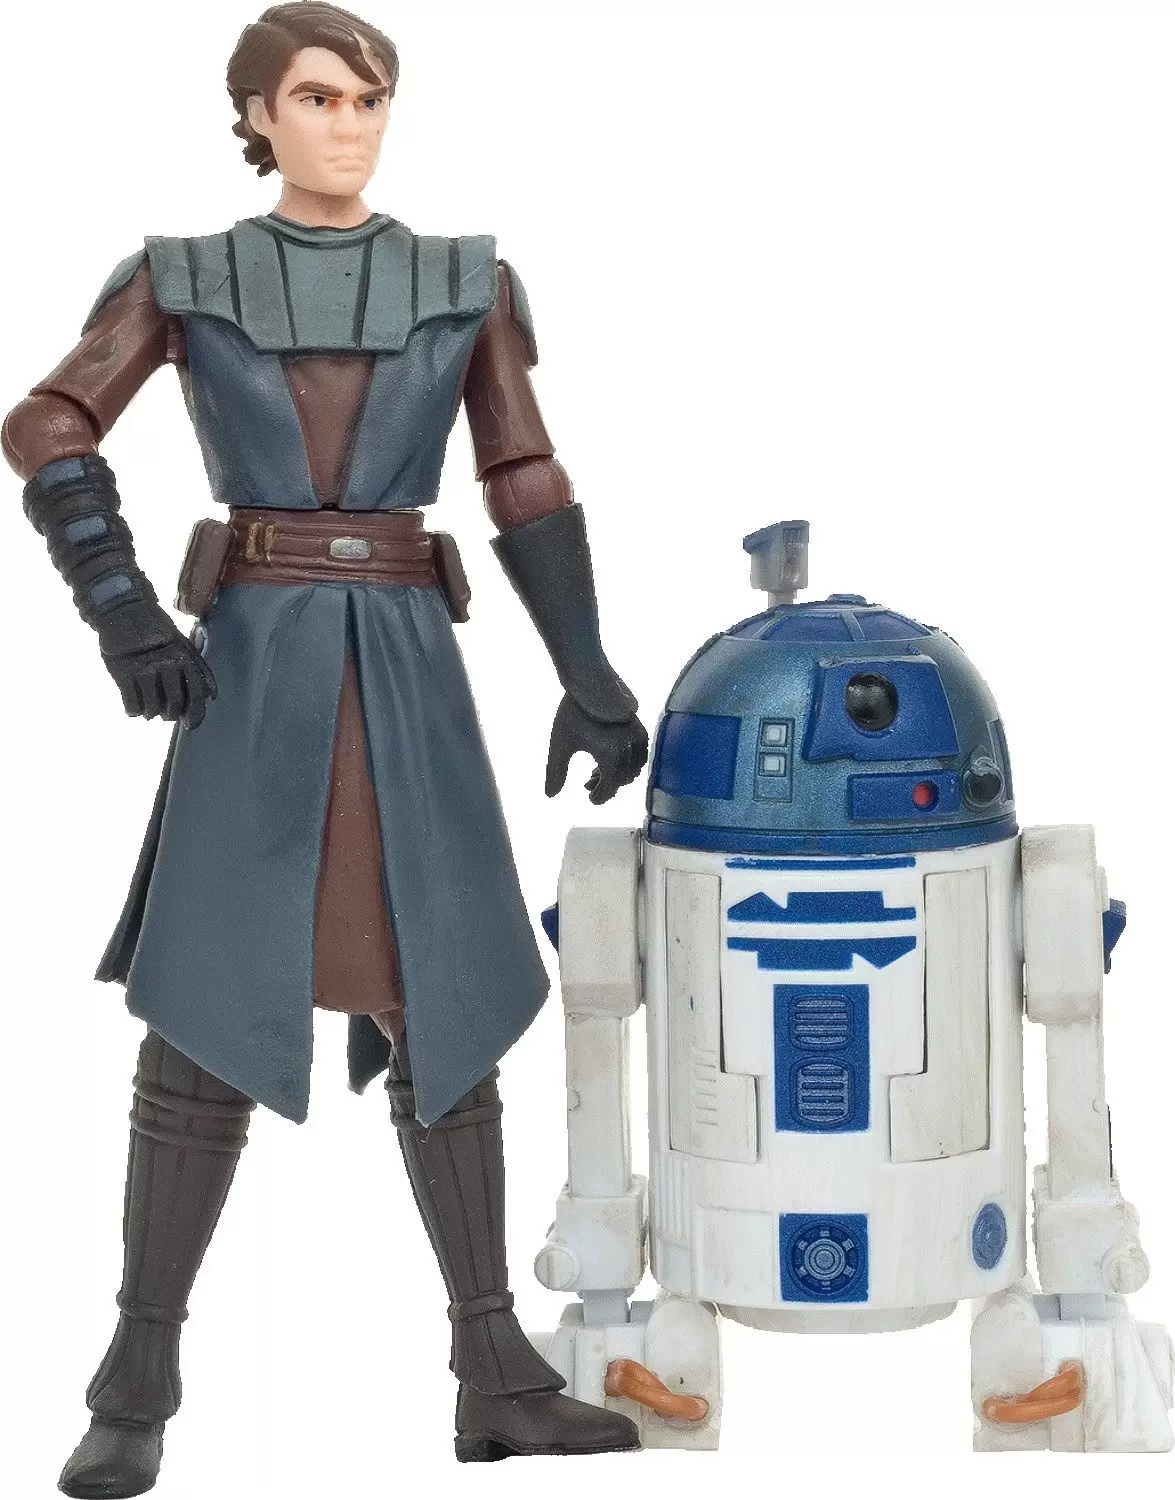 The Clone Wars (TCW 2009) - Anakin Skywalker & R2-D2